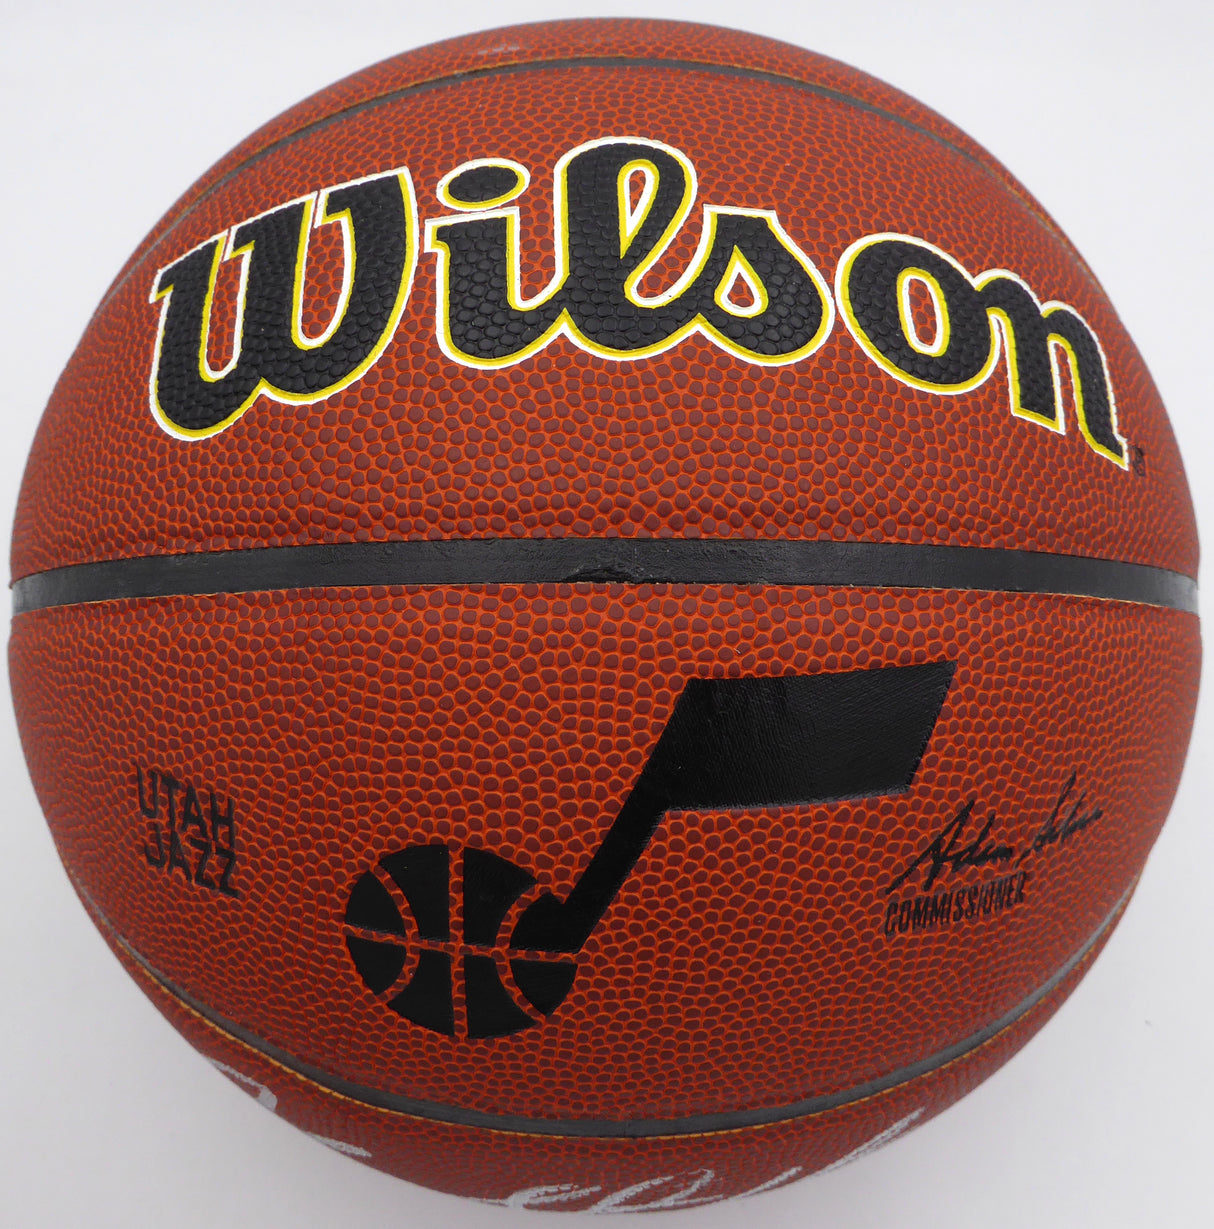 John Stockton Autographed Basketball Utah Jazz (Smudged) Beckett BAS QR #1W271700